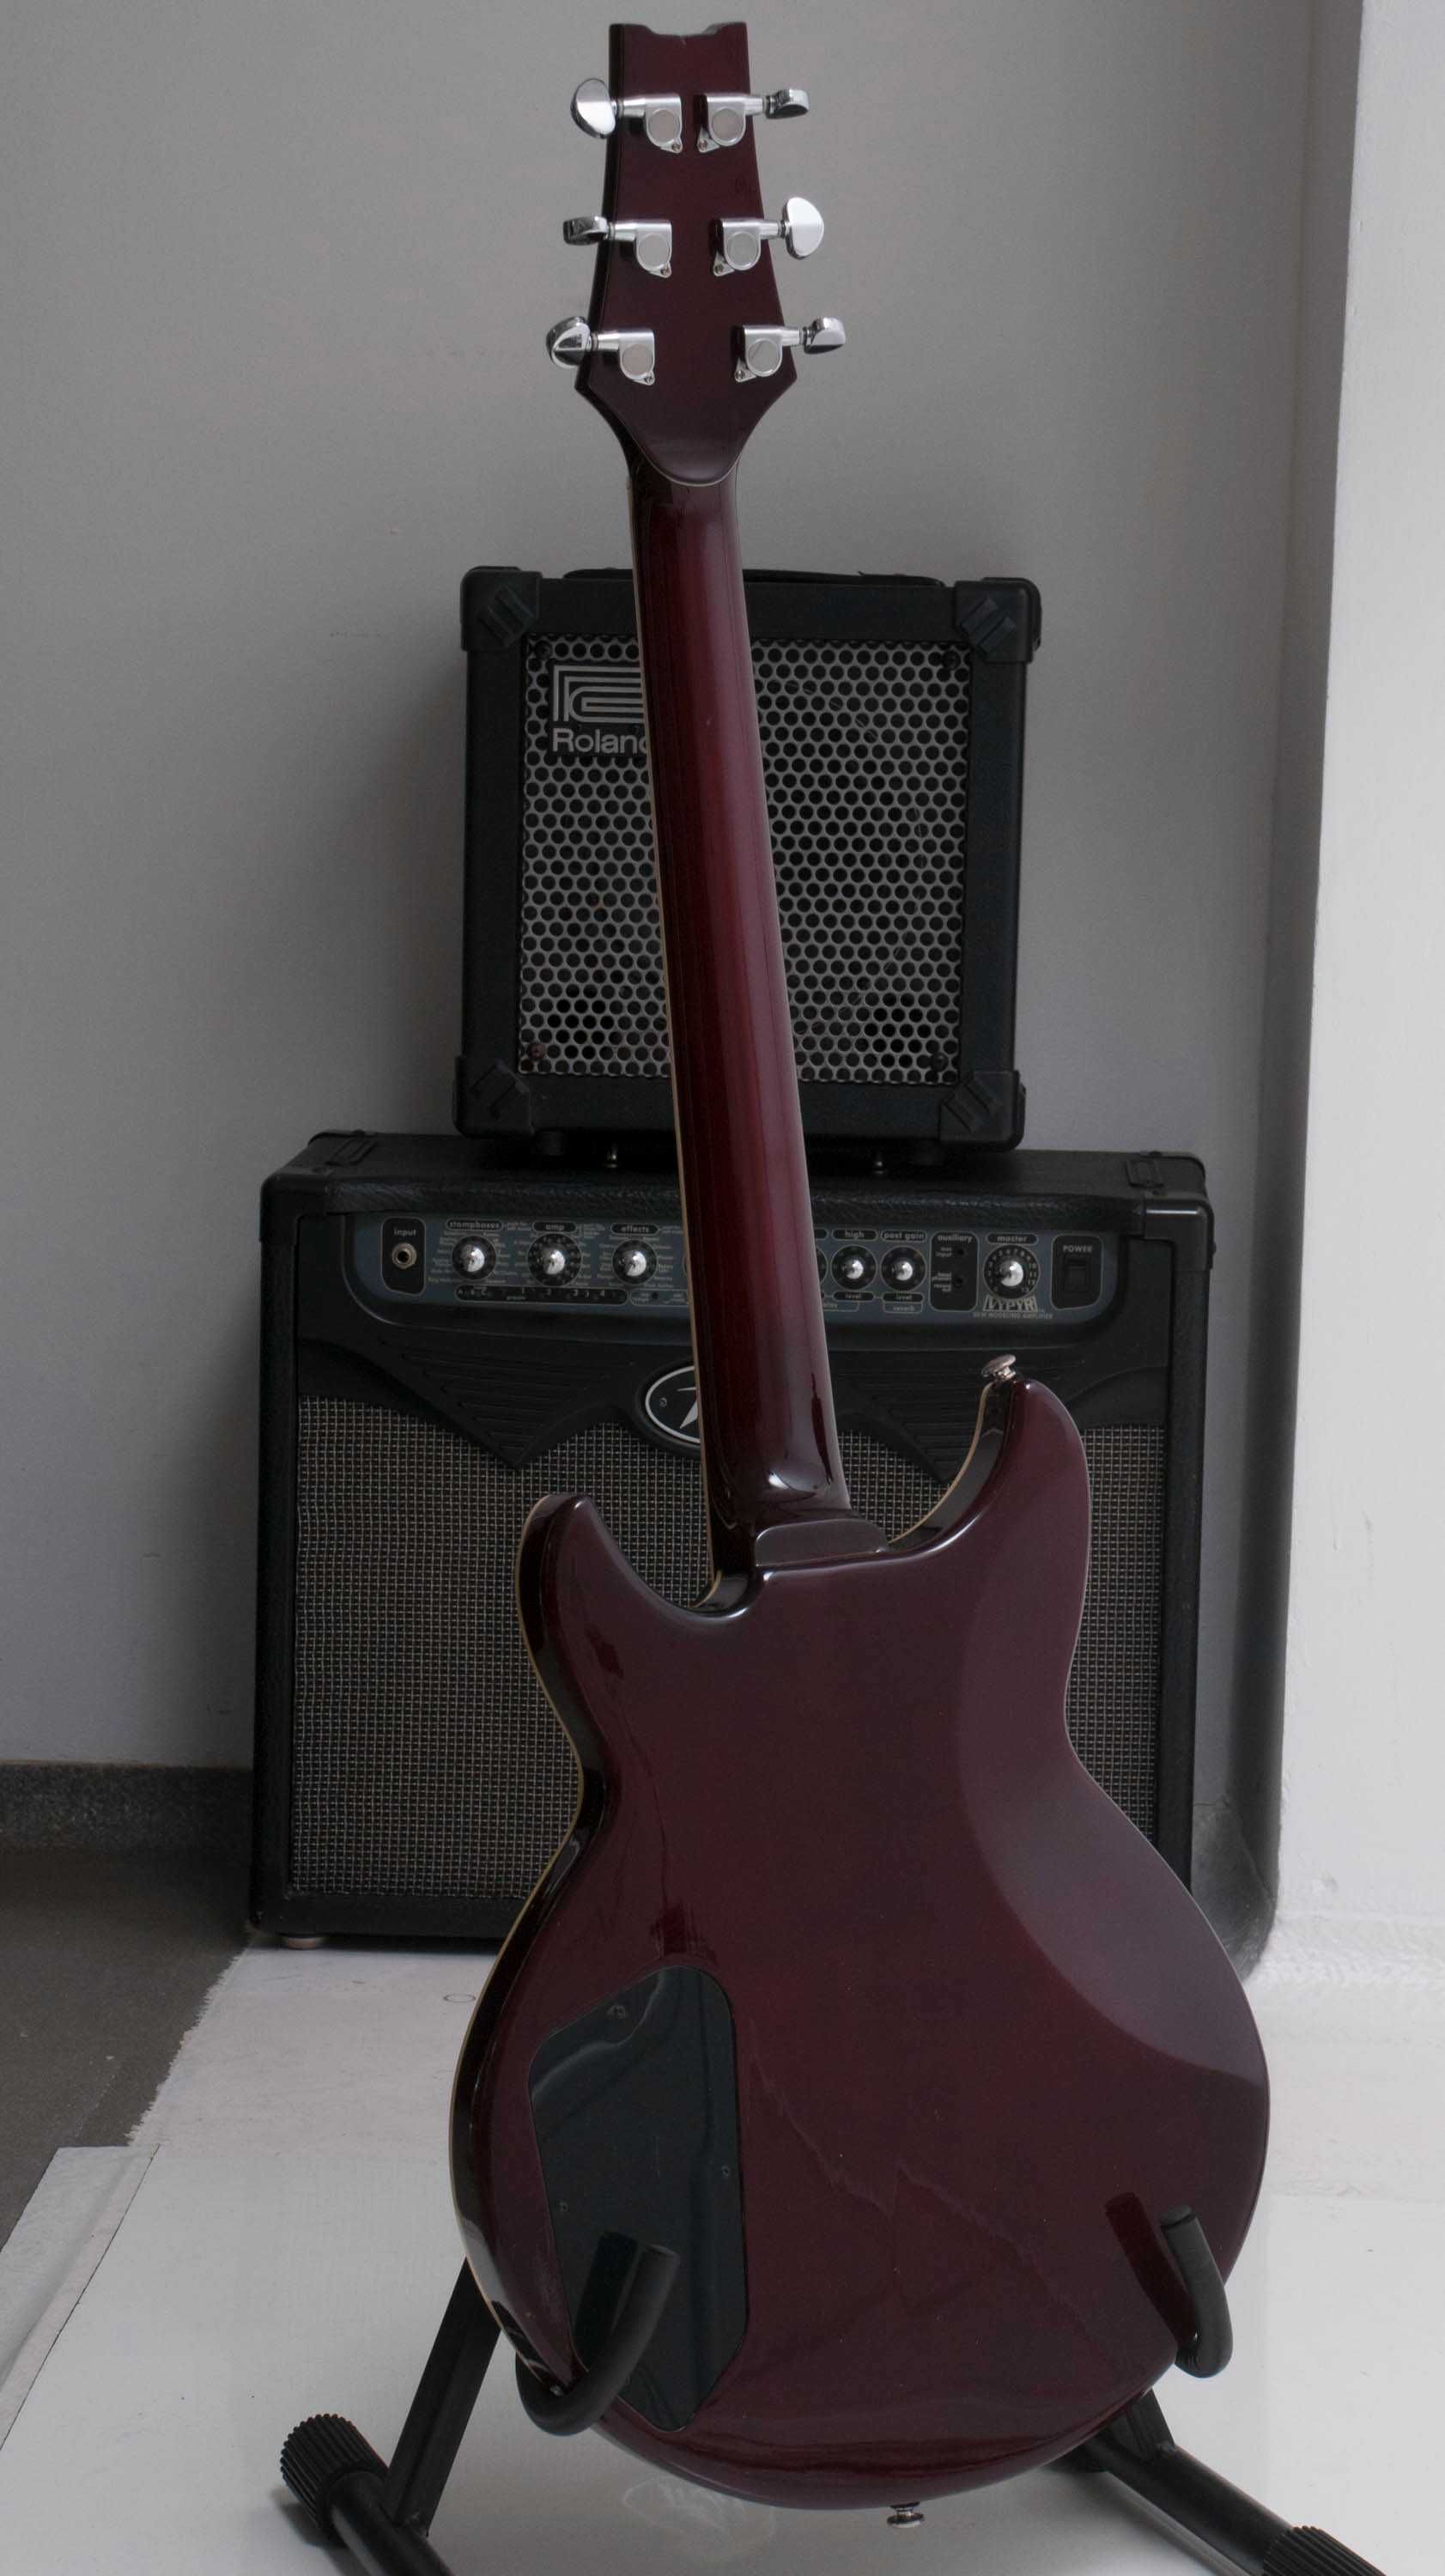 Ibanez Artist ARX300 e Epiphone Prophecy GX Pickups Gibson